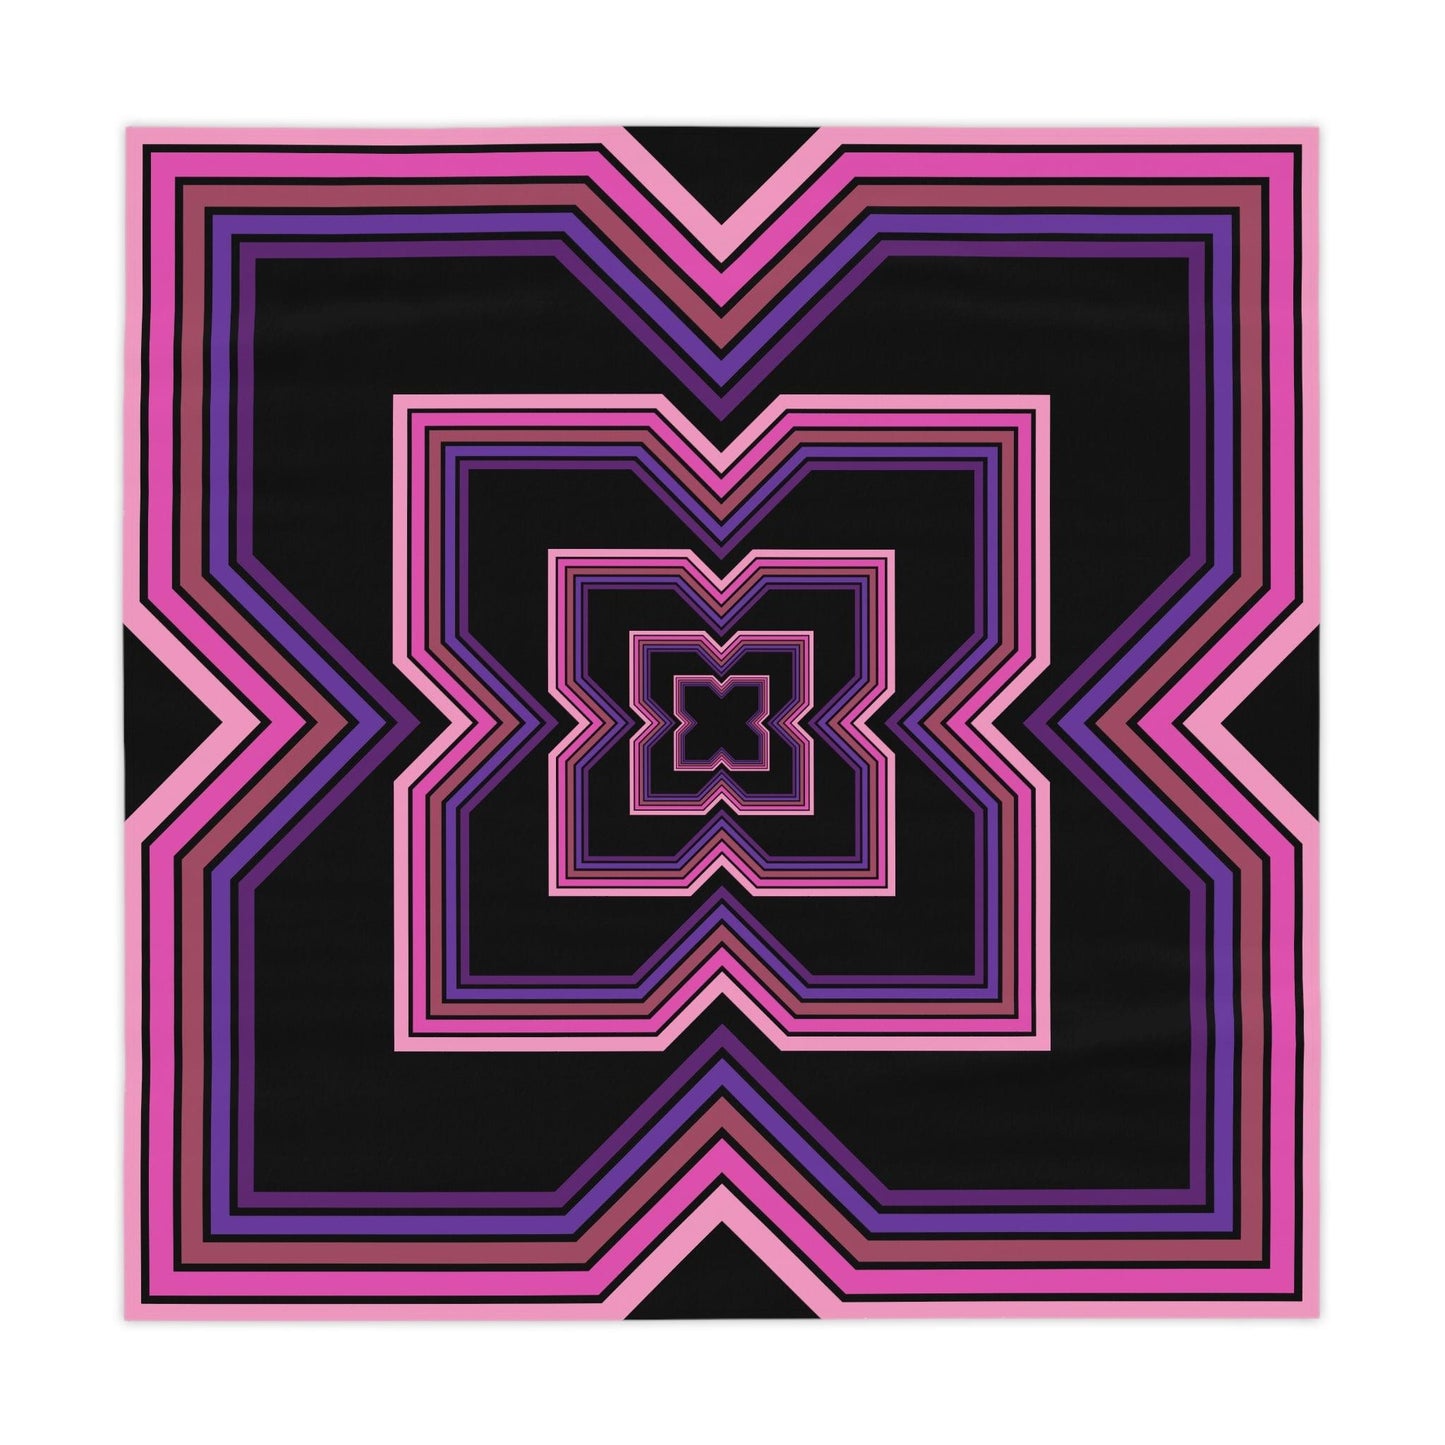 Retro 80s 90s Vaporwave Aesthetic Pink, Purple & Black Tablecloth | lovevisionkarma.com